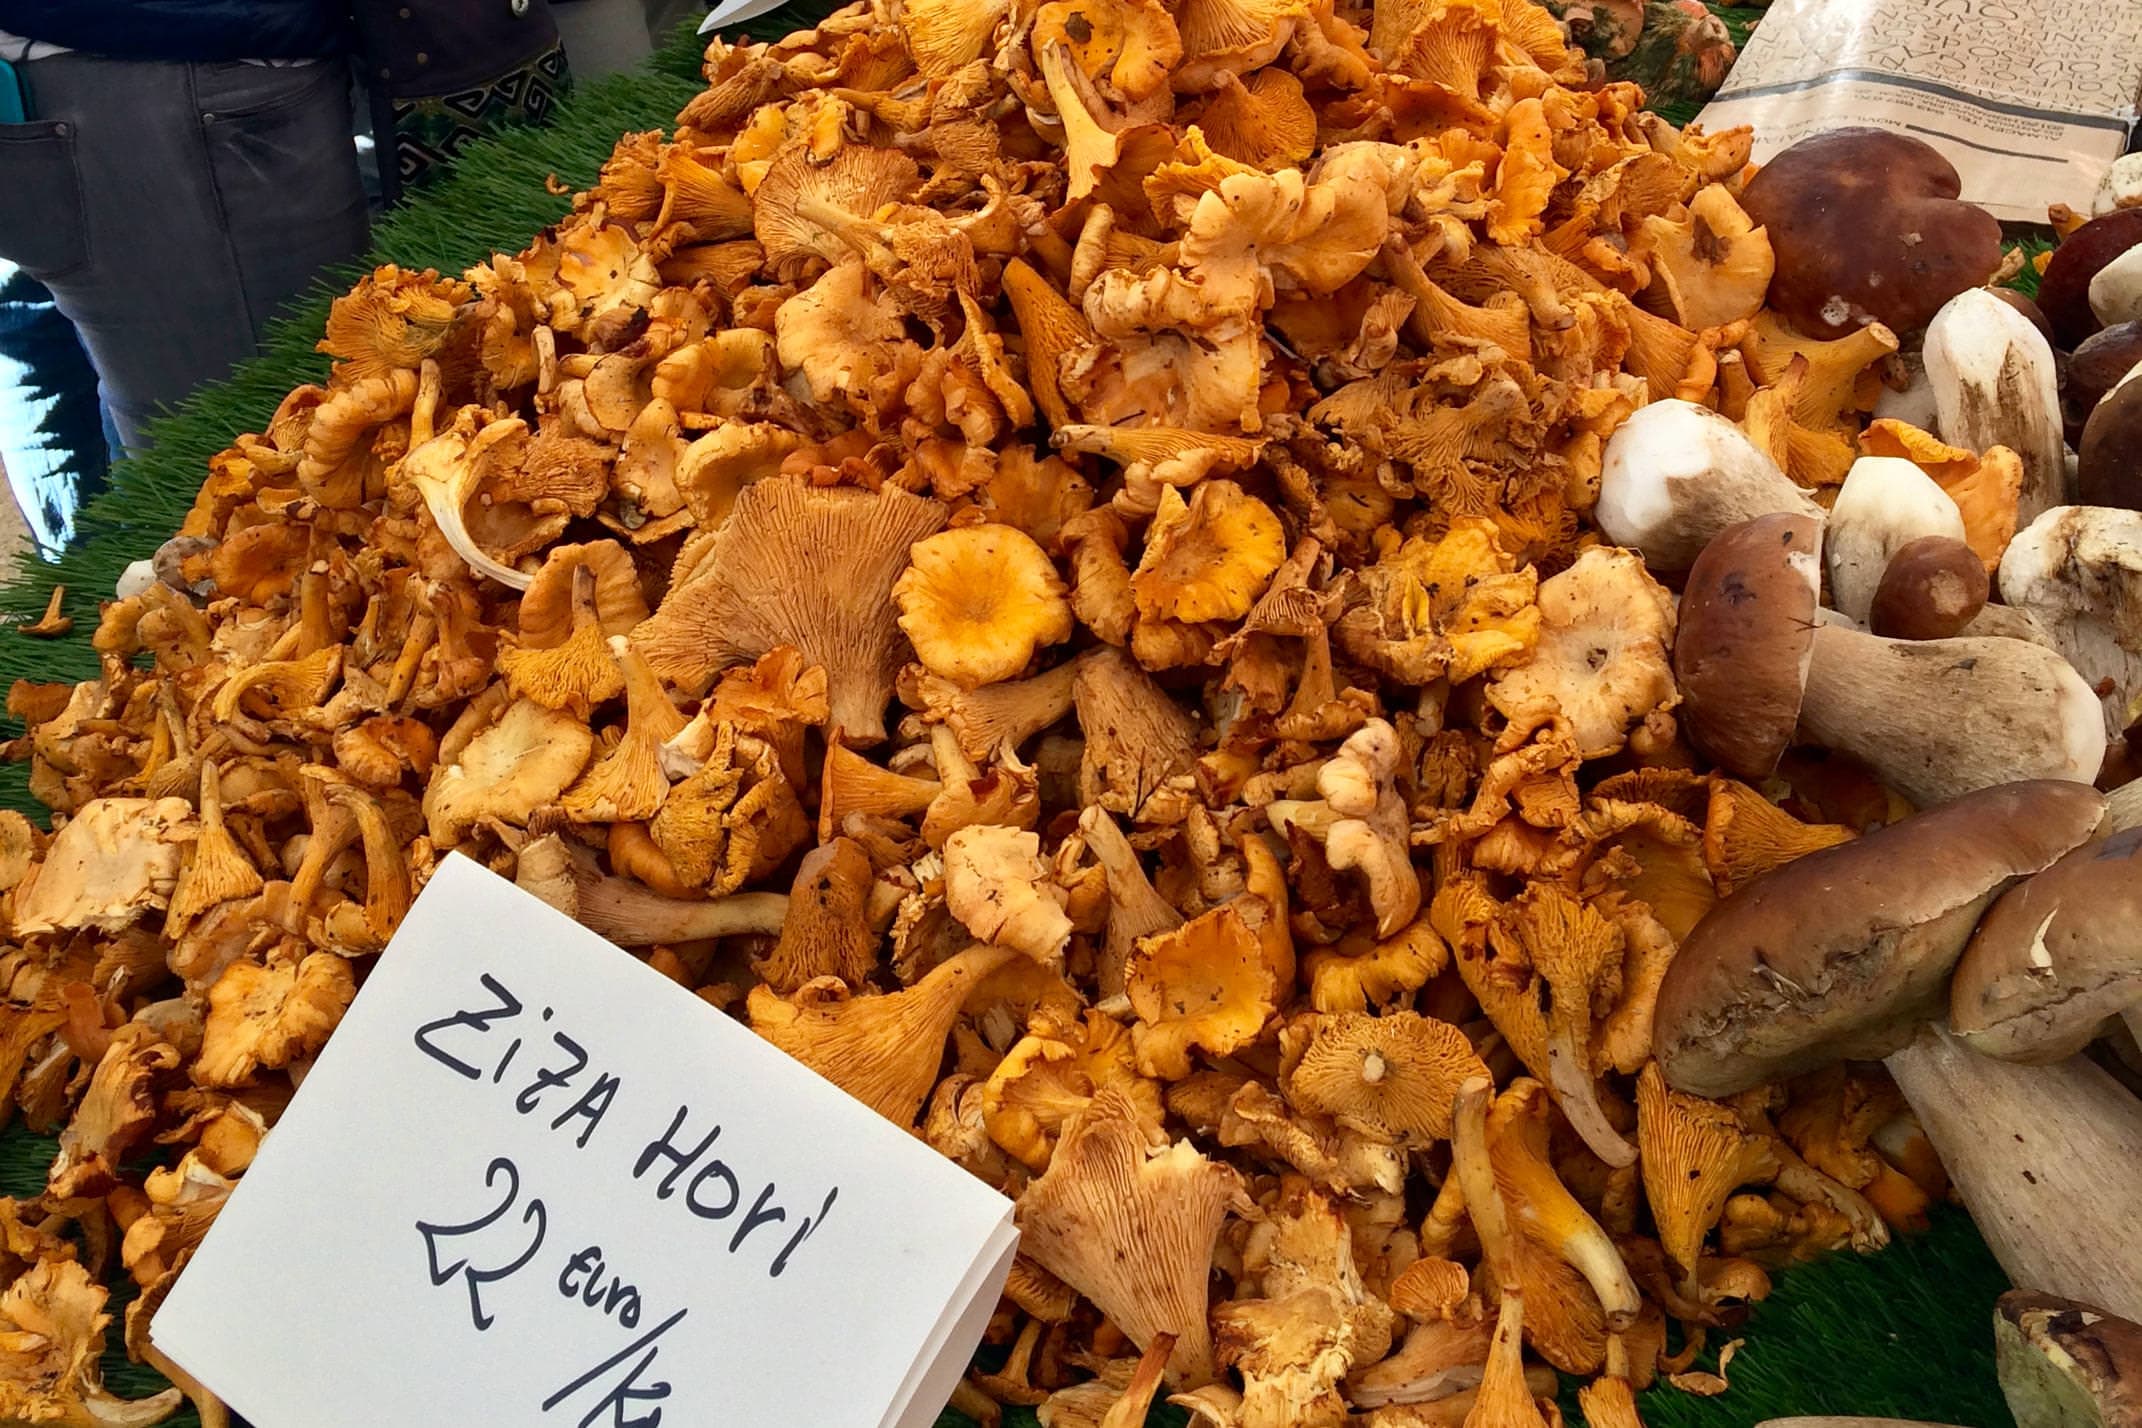 Spain basque country tolosa market mushrooms c xabi etxarri